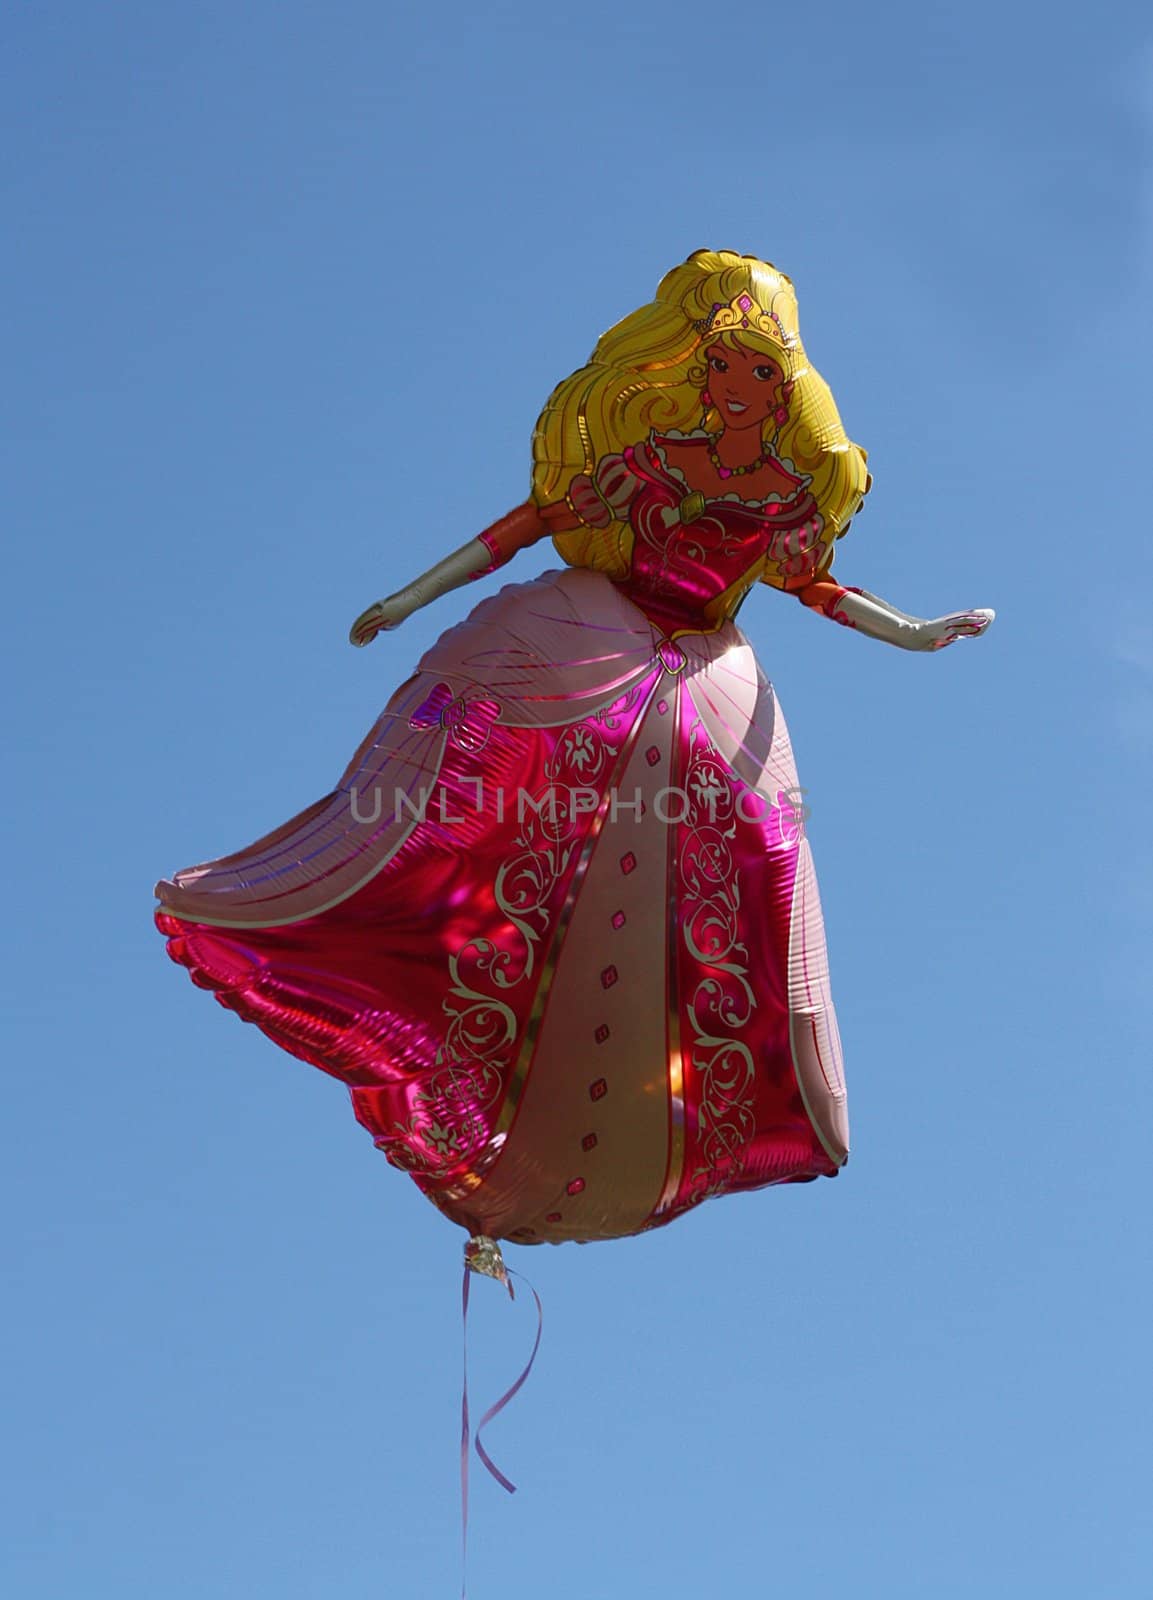 Princess helium balloon against blue sky by sundaune